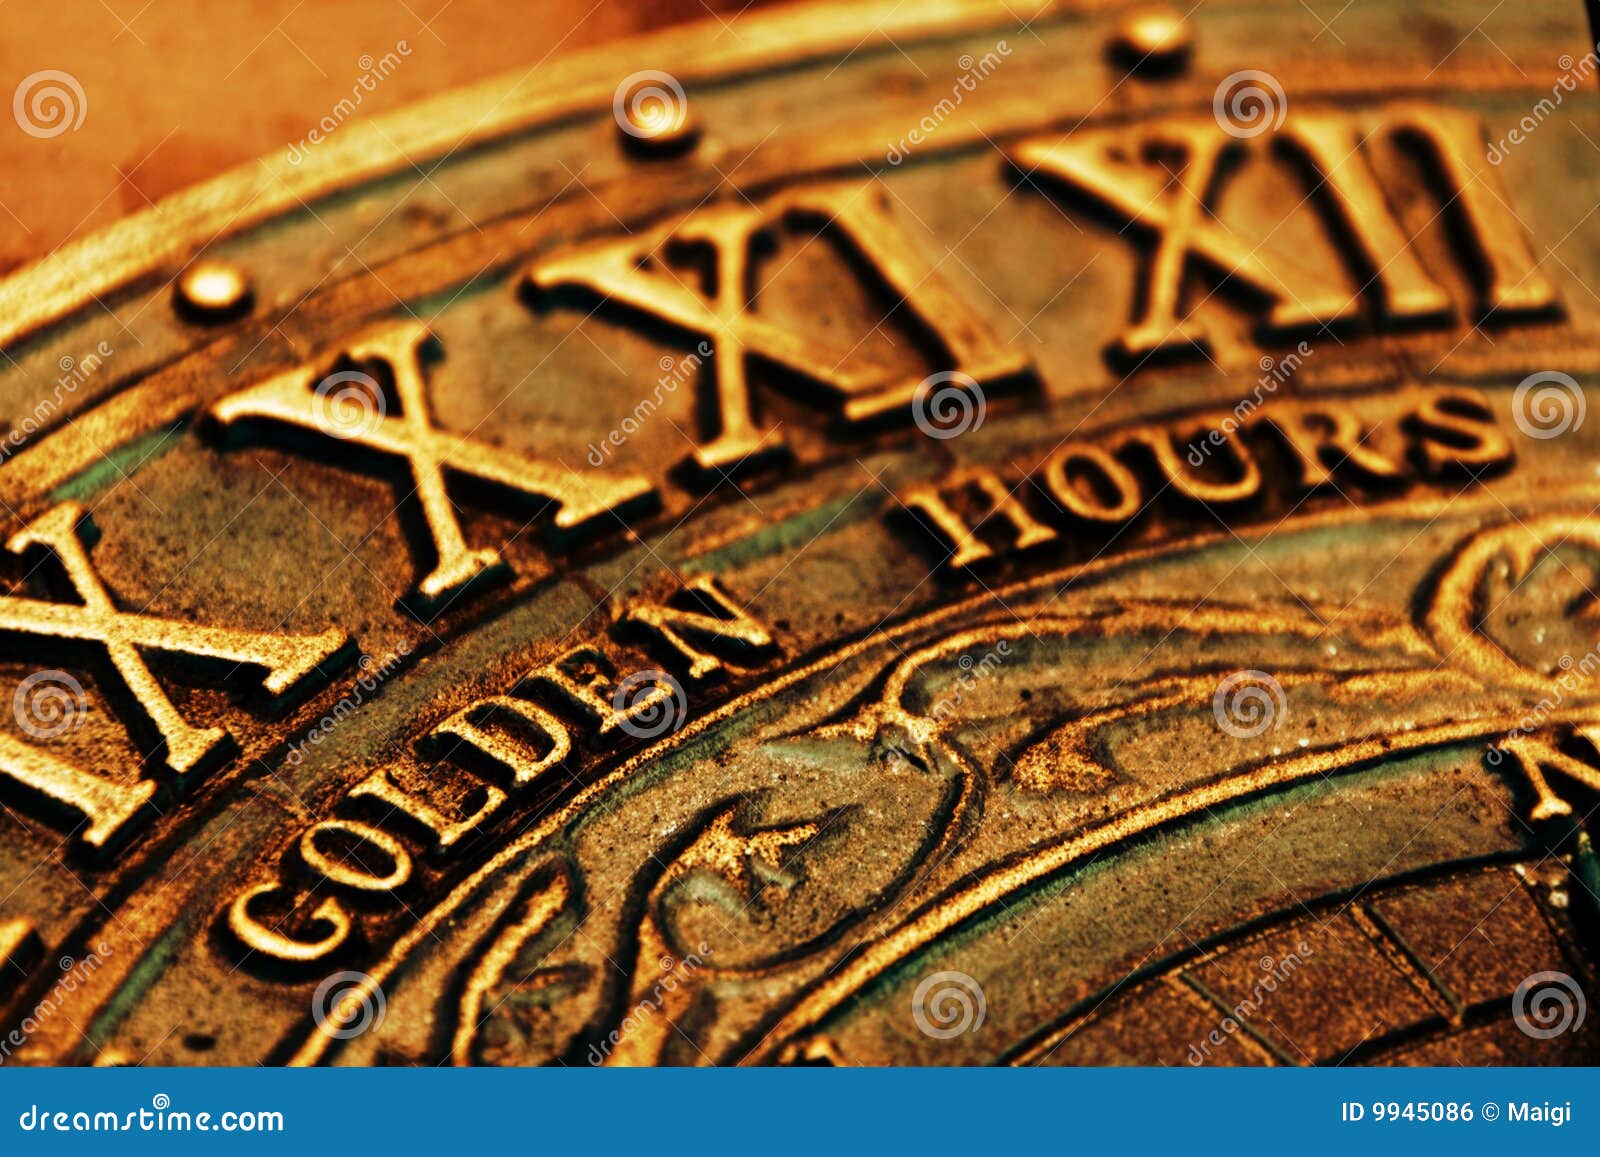 Golden hours stock photo. Image of clock, macro, incremental - 9945086